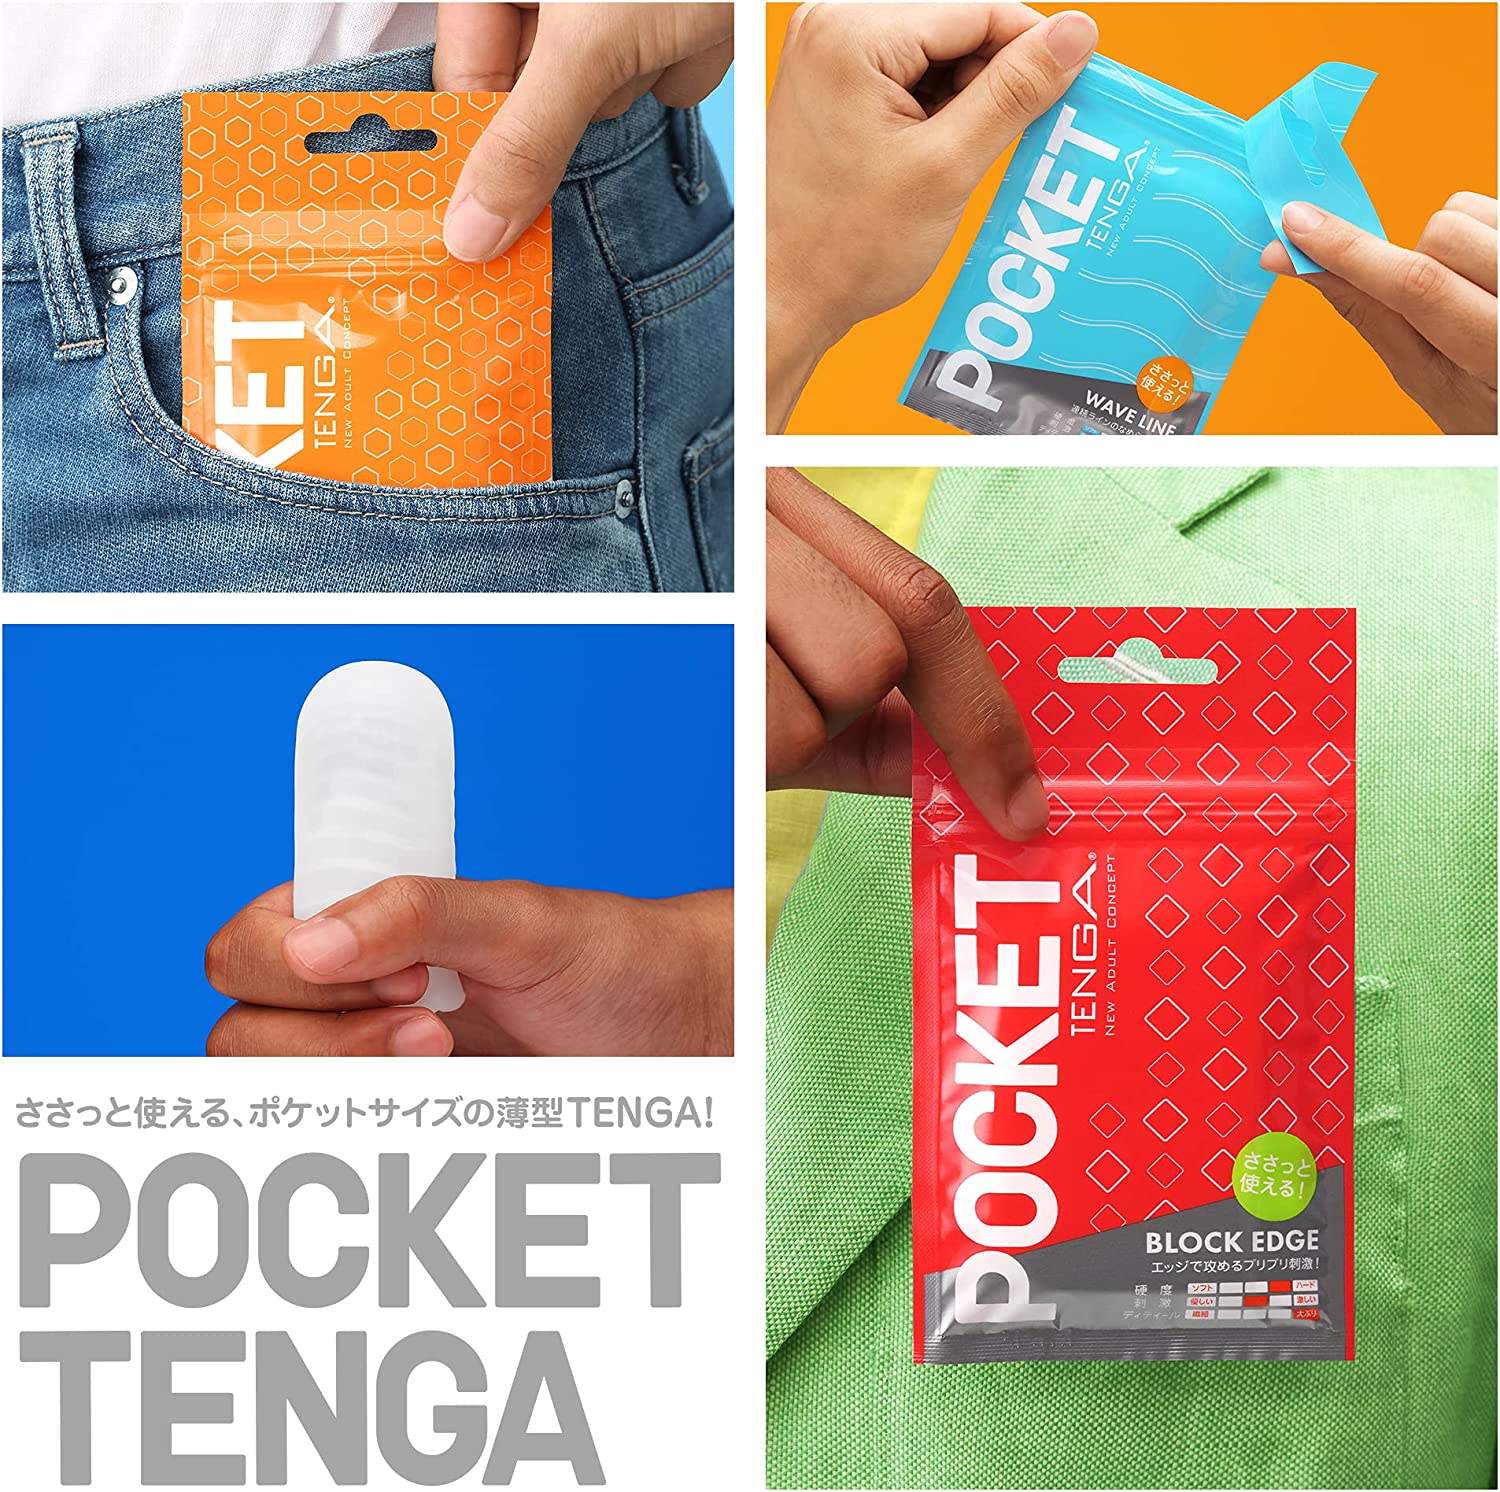 TENGA Pocket POT-003 块边男用自慰器，红色